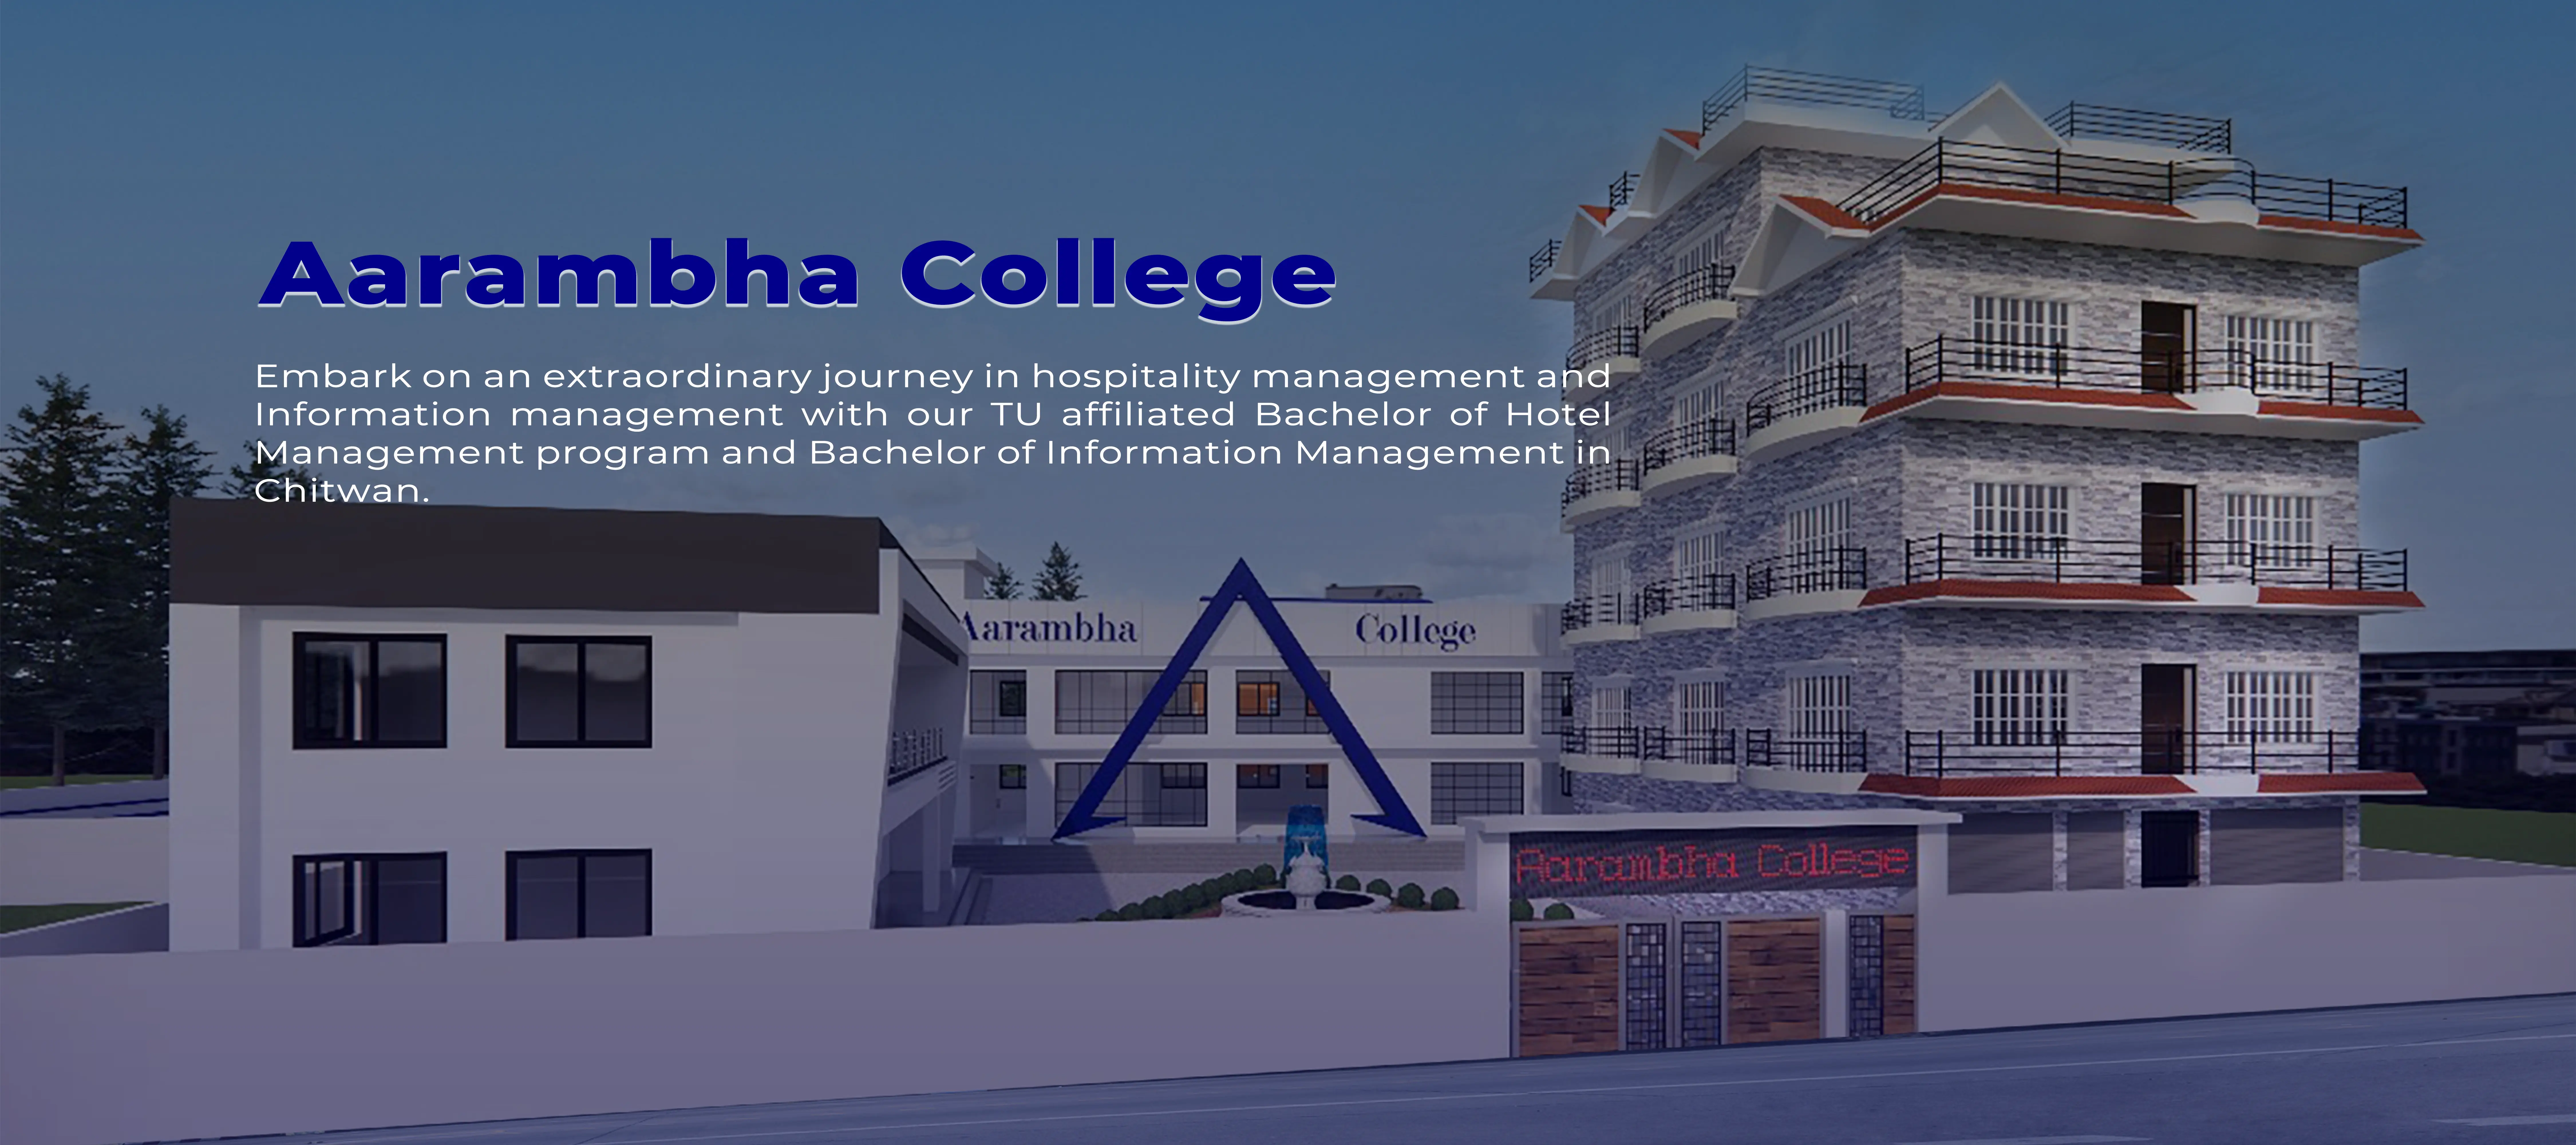 Aarambha College Building